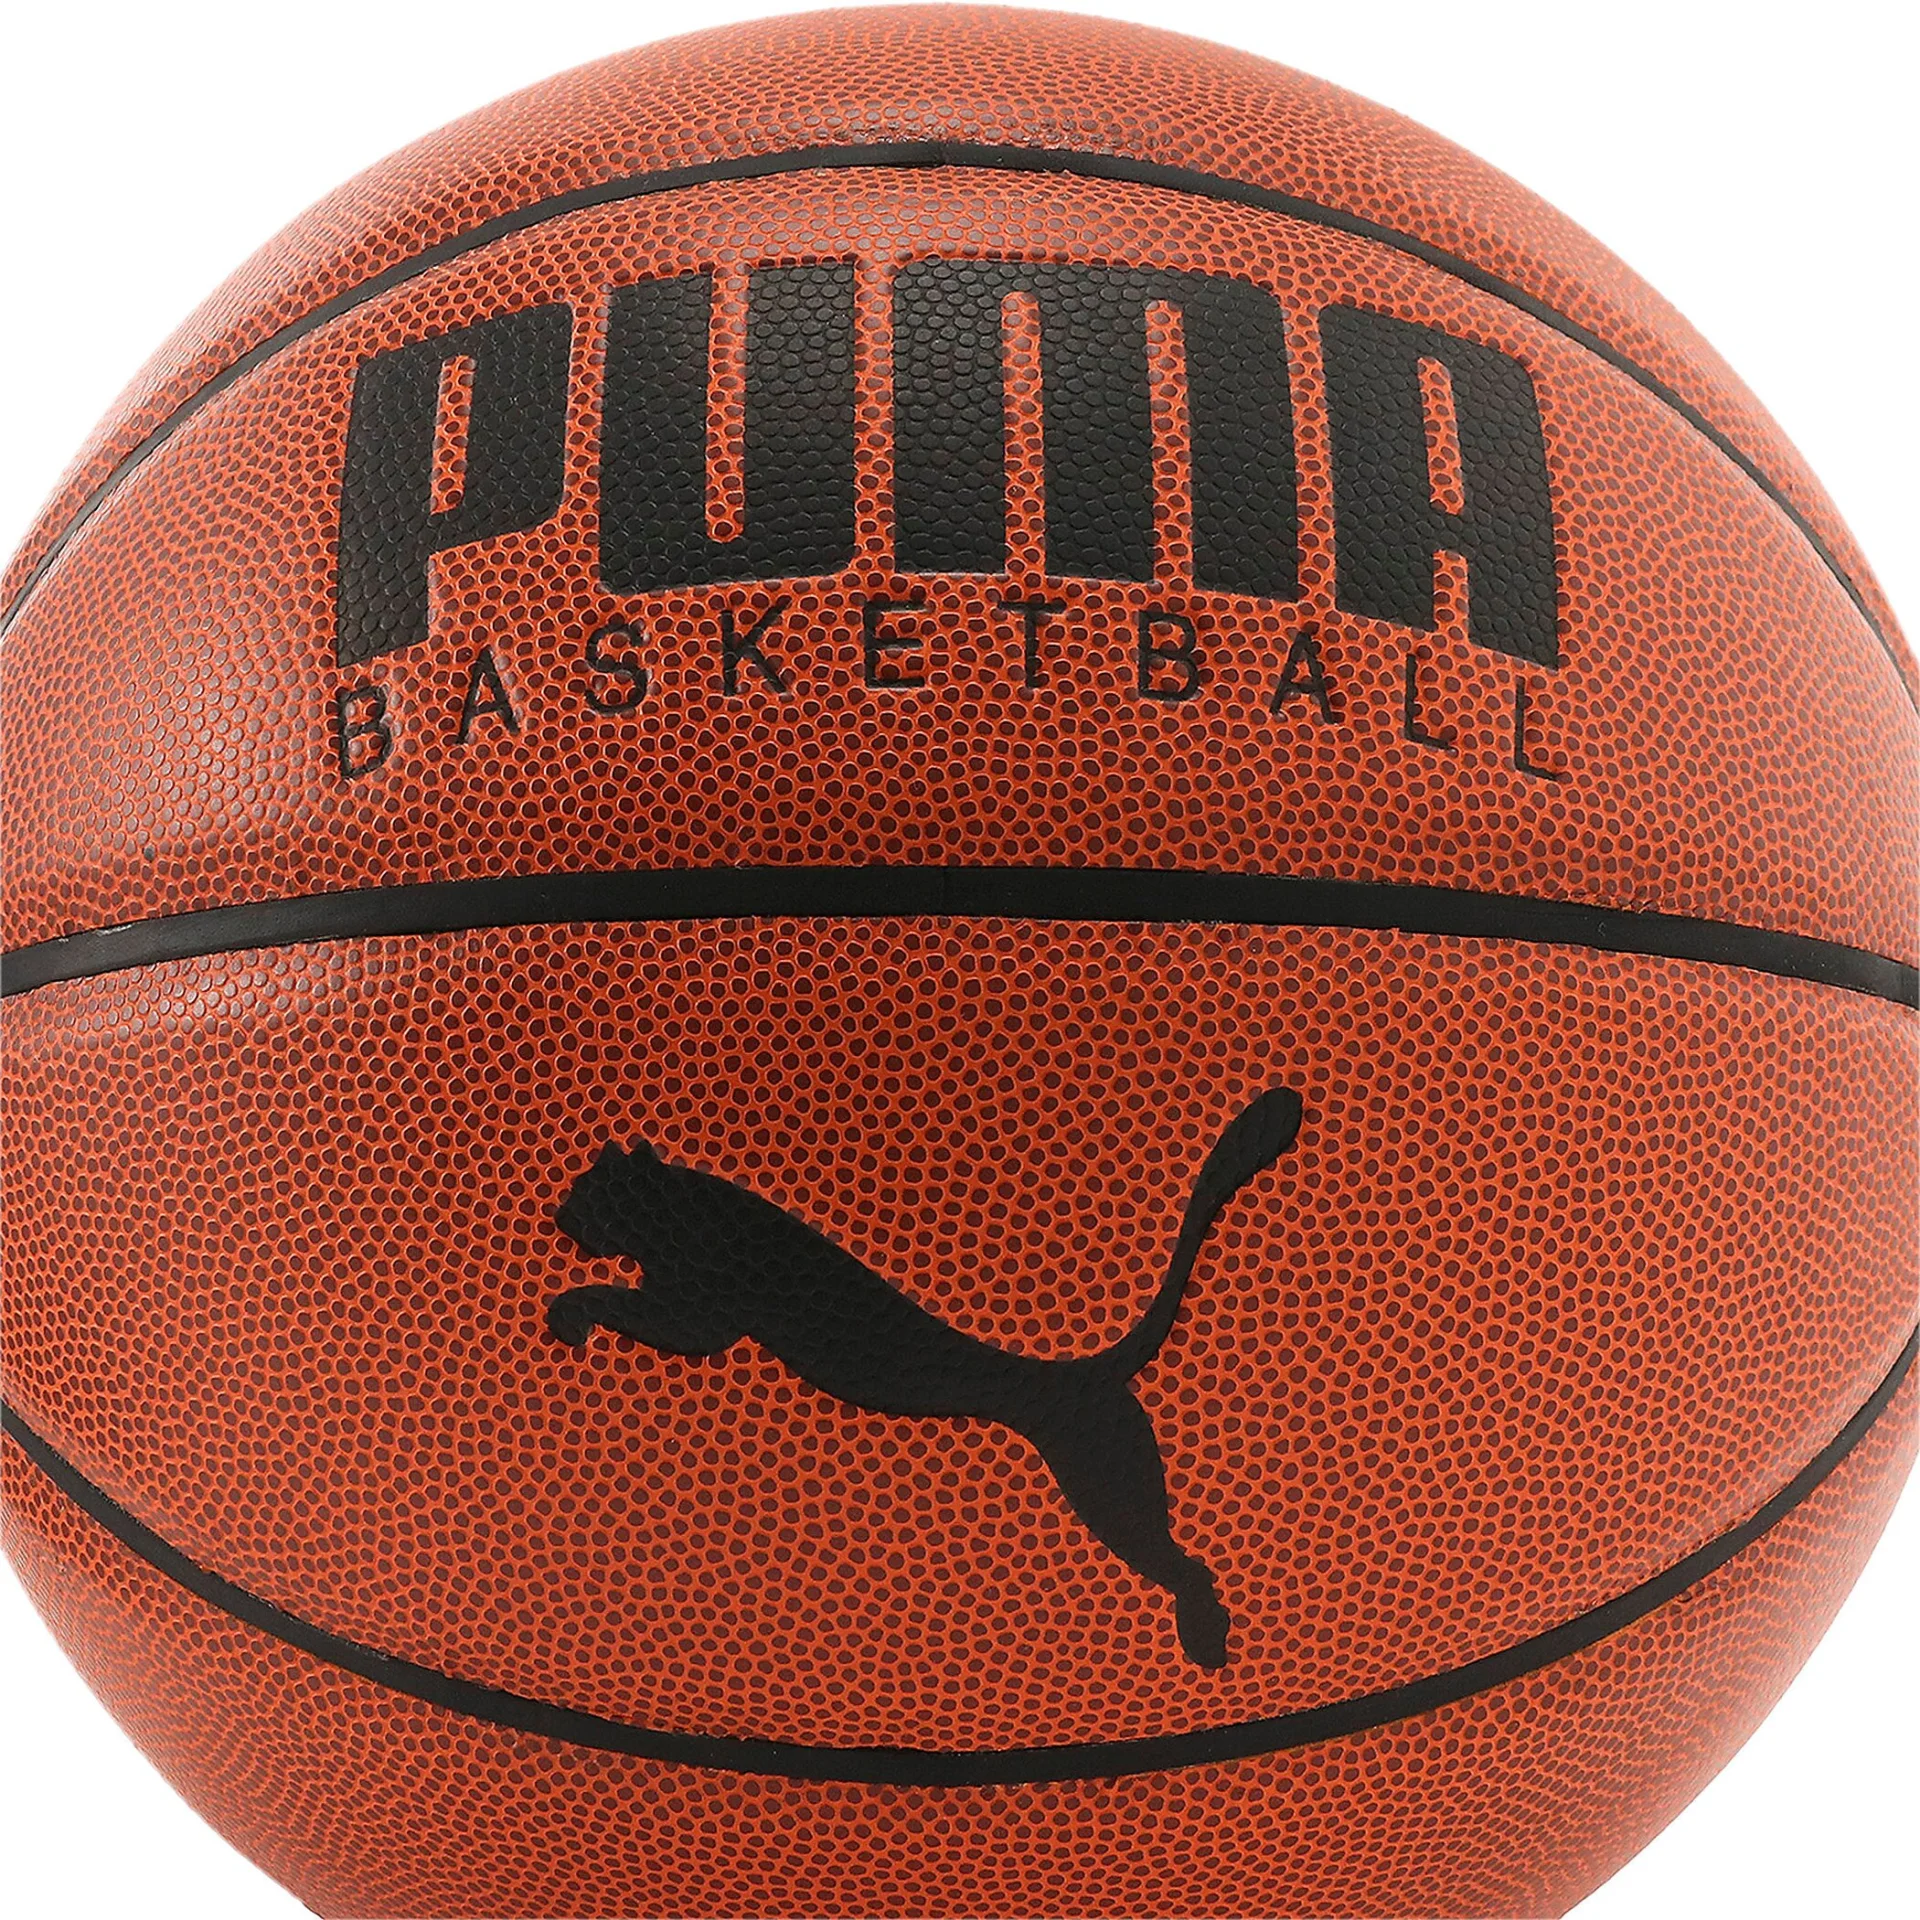 PUMA Ball_Puma_Basketball_Top 083557 001 LEATHER BROWN-PUMA BLACK